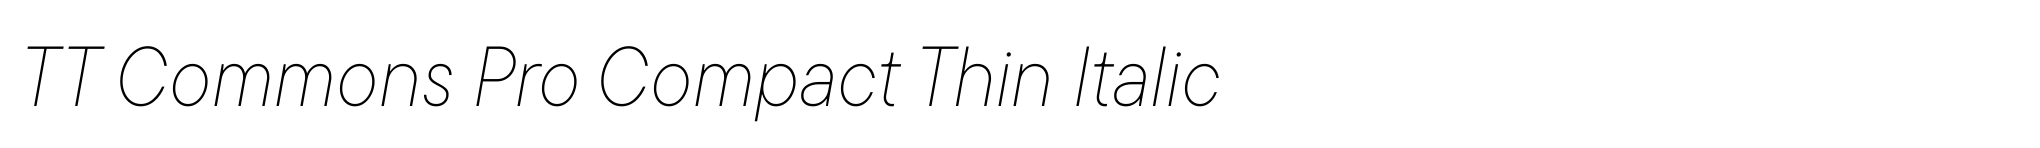 TT Commons Pro Compact Thin Italic image